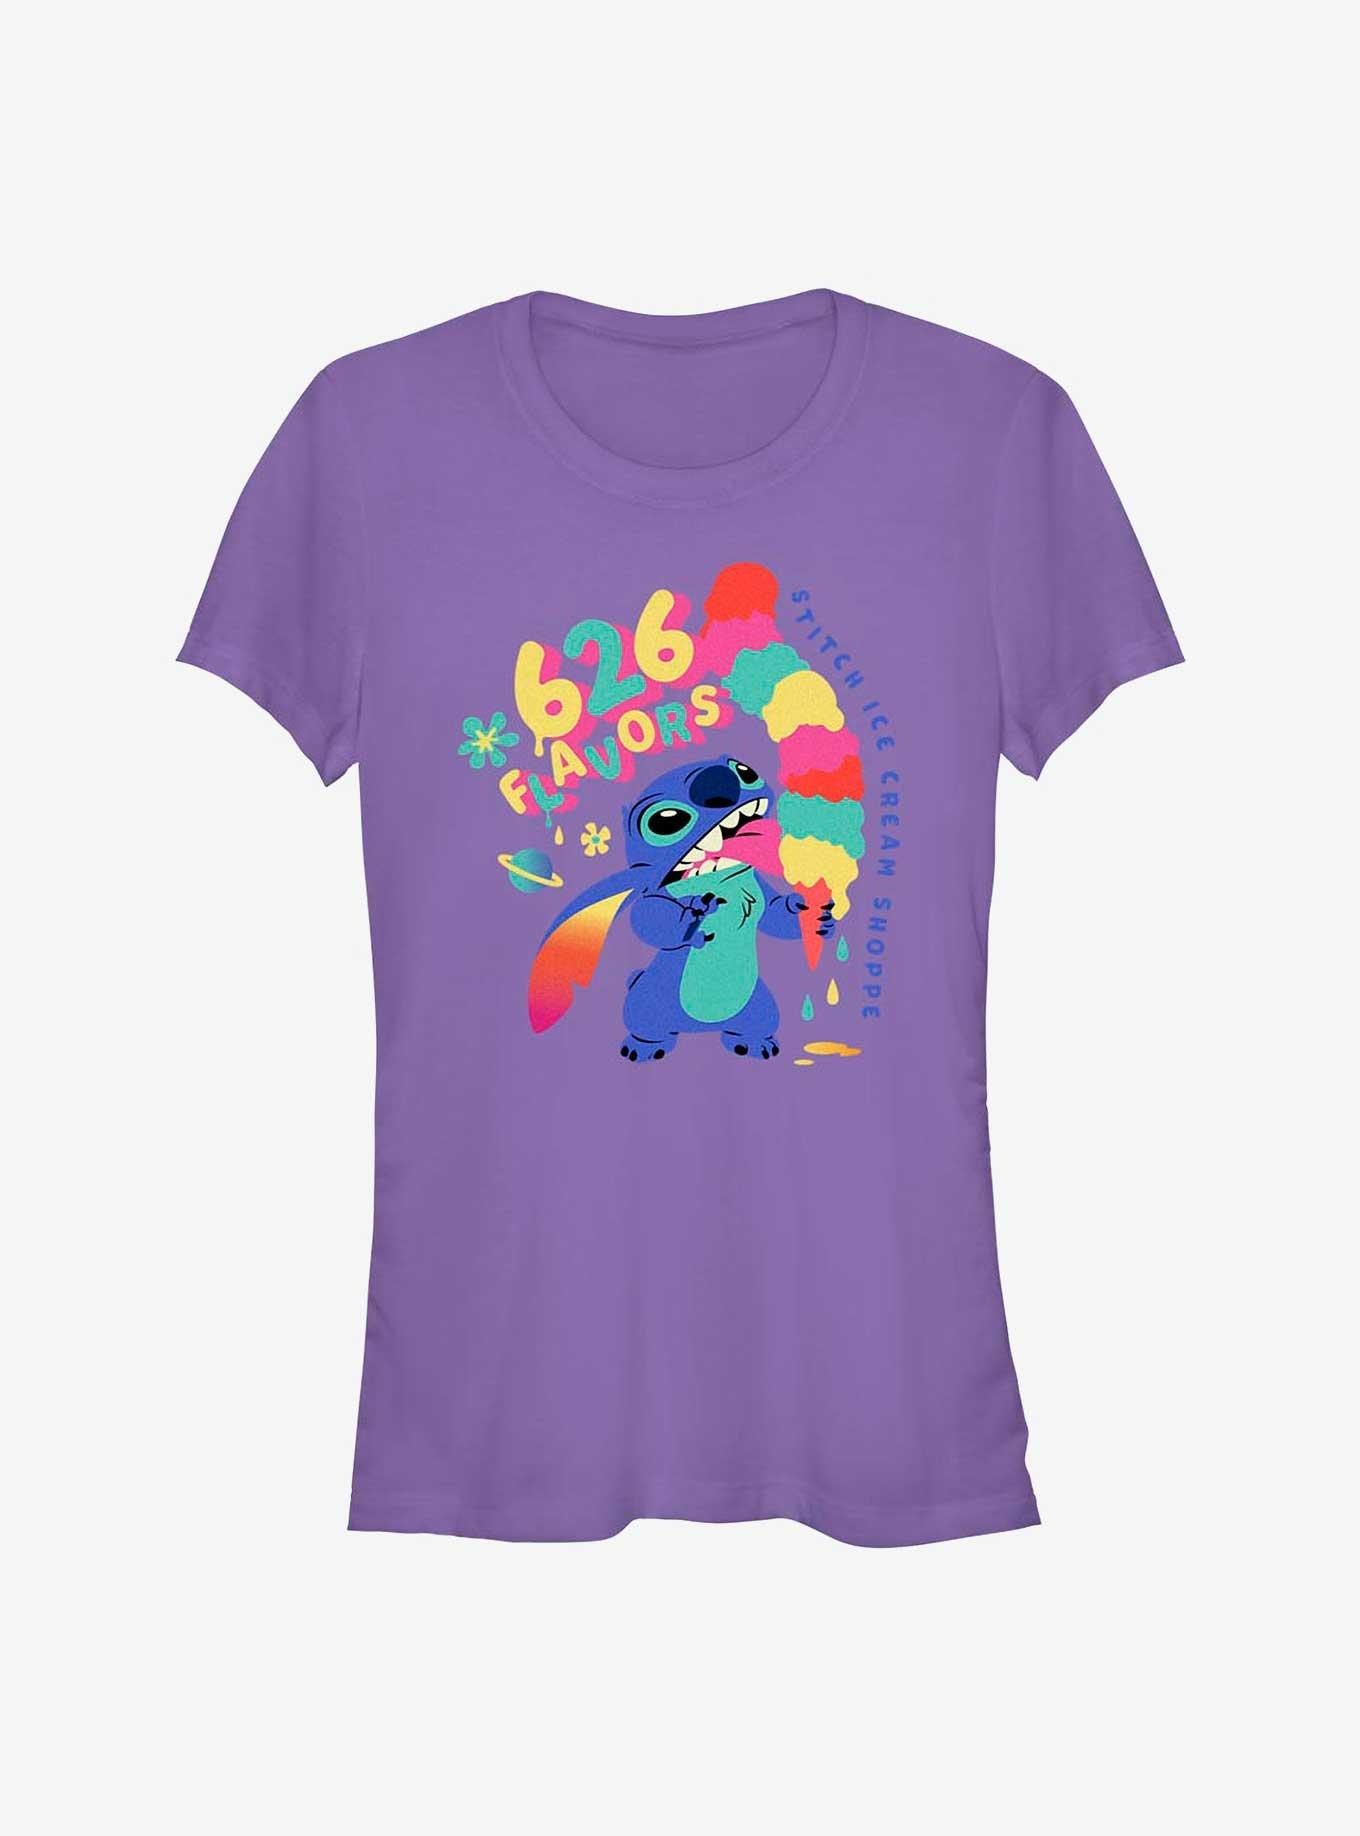 Disney Lilo & Stitch 626 Flavors Girls T-Shirt, PURPLE, hi-res